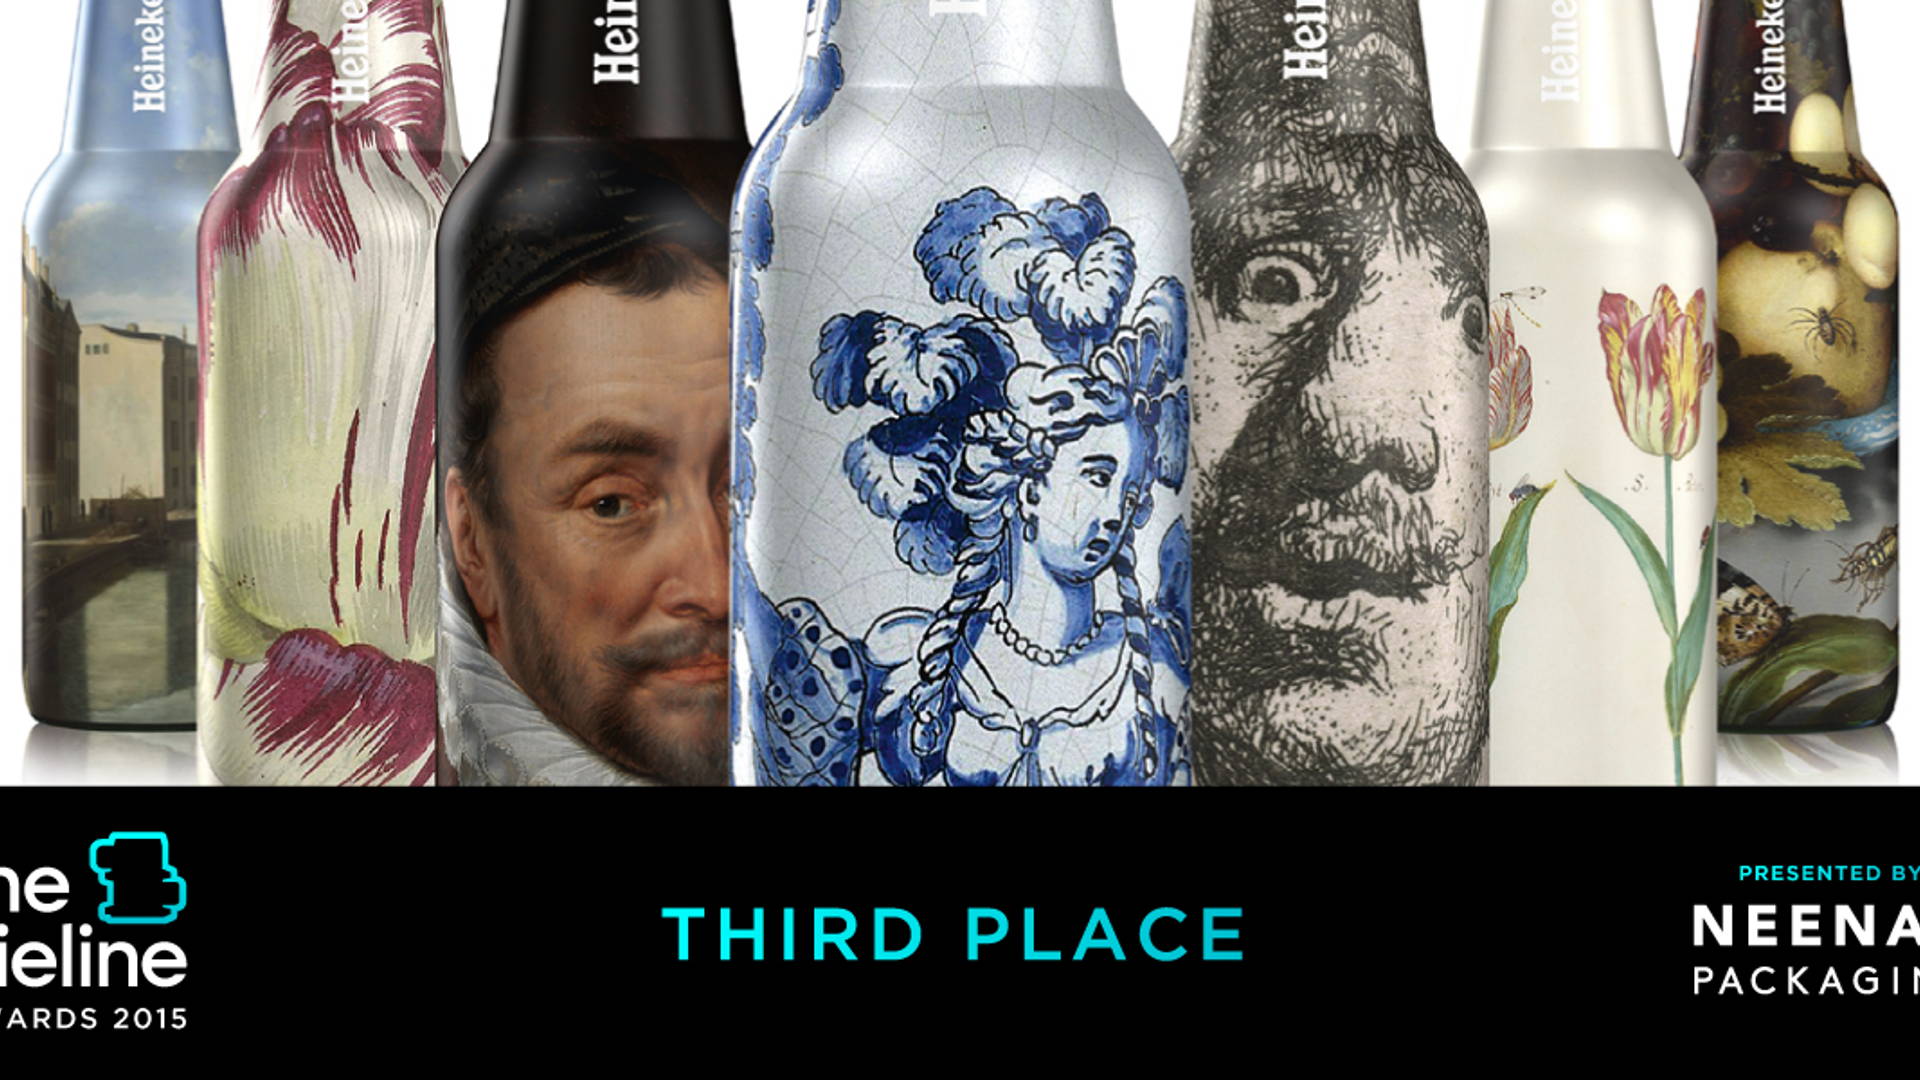 Featured image for The Dieline Awards 2015: 3rd Place Beer, Malt Beverages, Tobacco- Heineken Amsterdam Originals, The Rijksmuseum Bottles